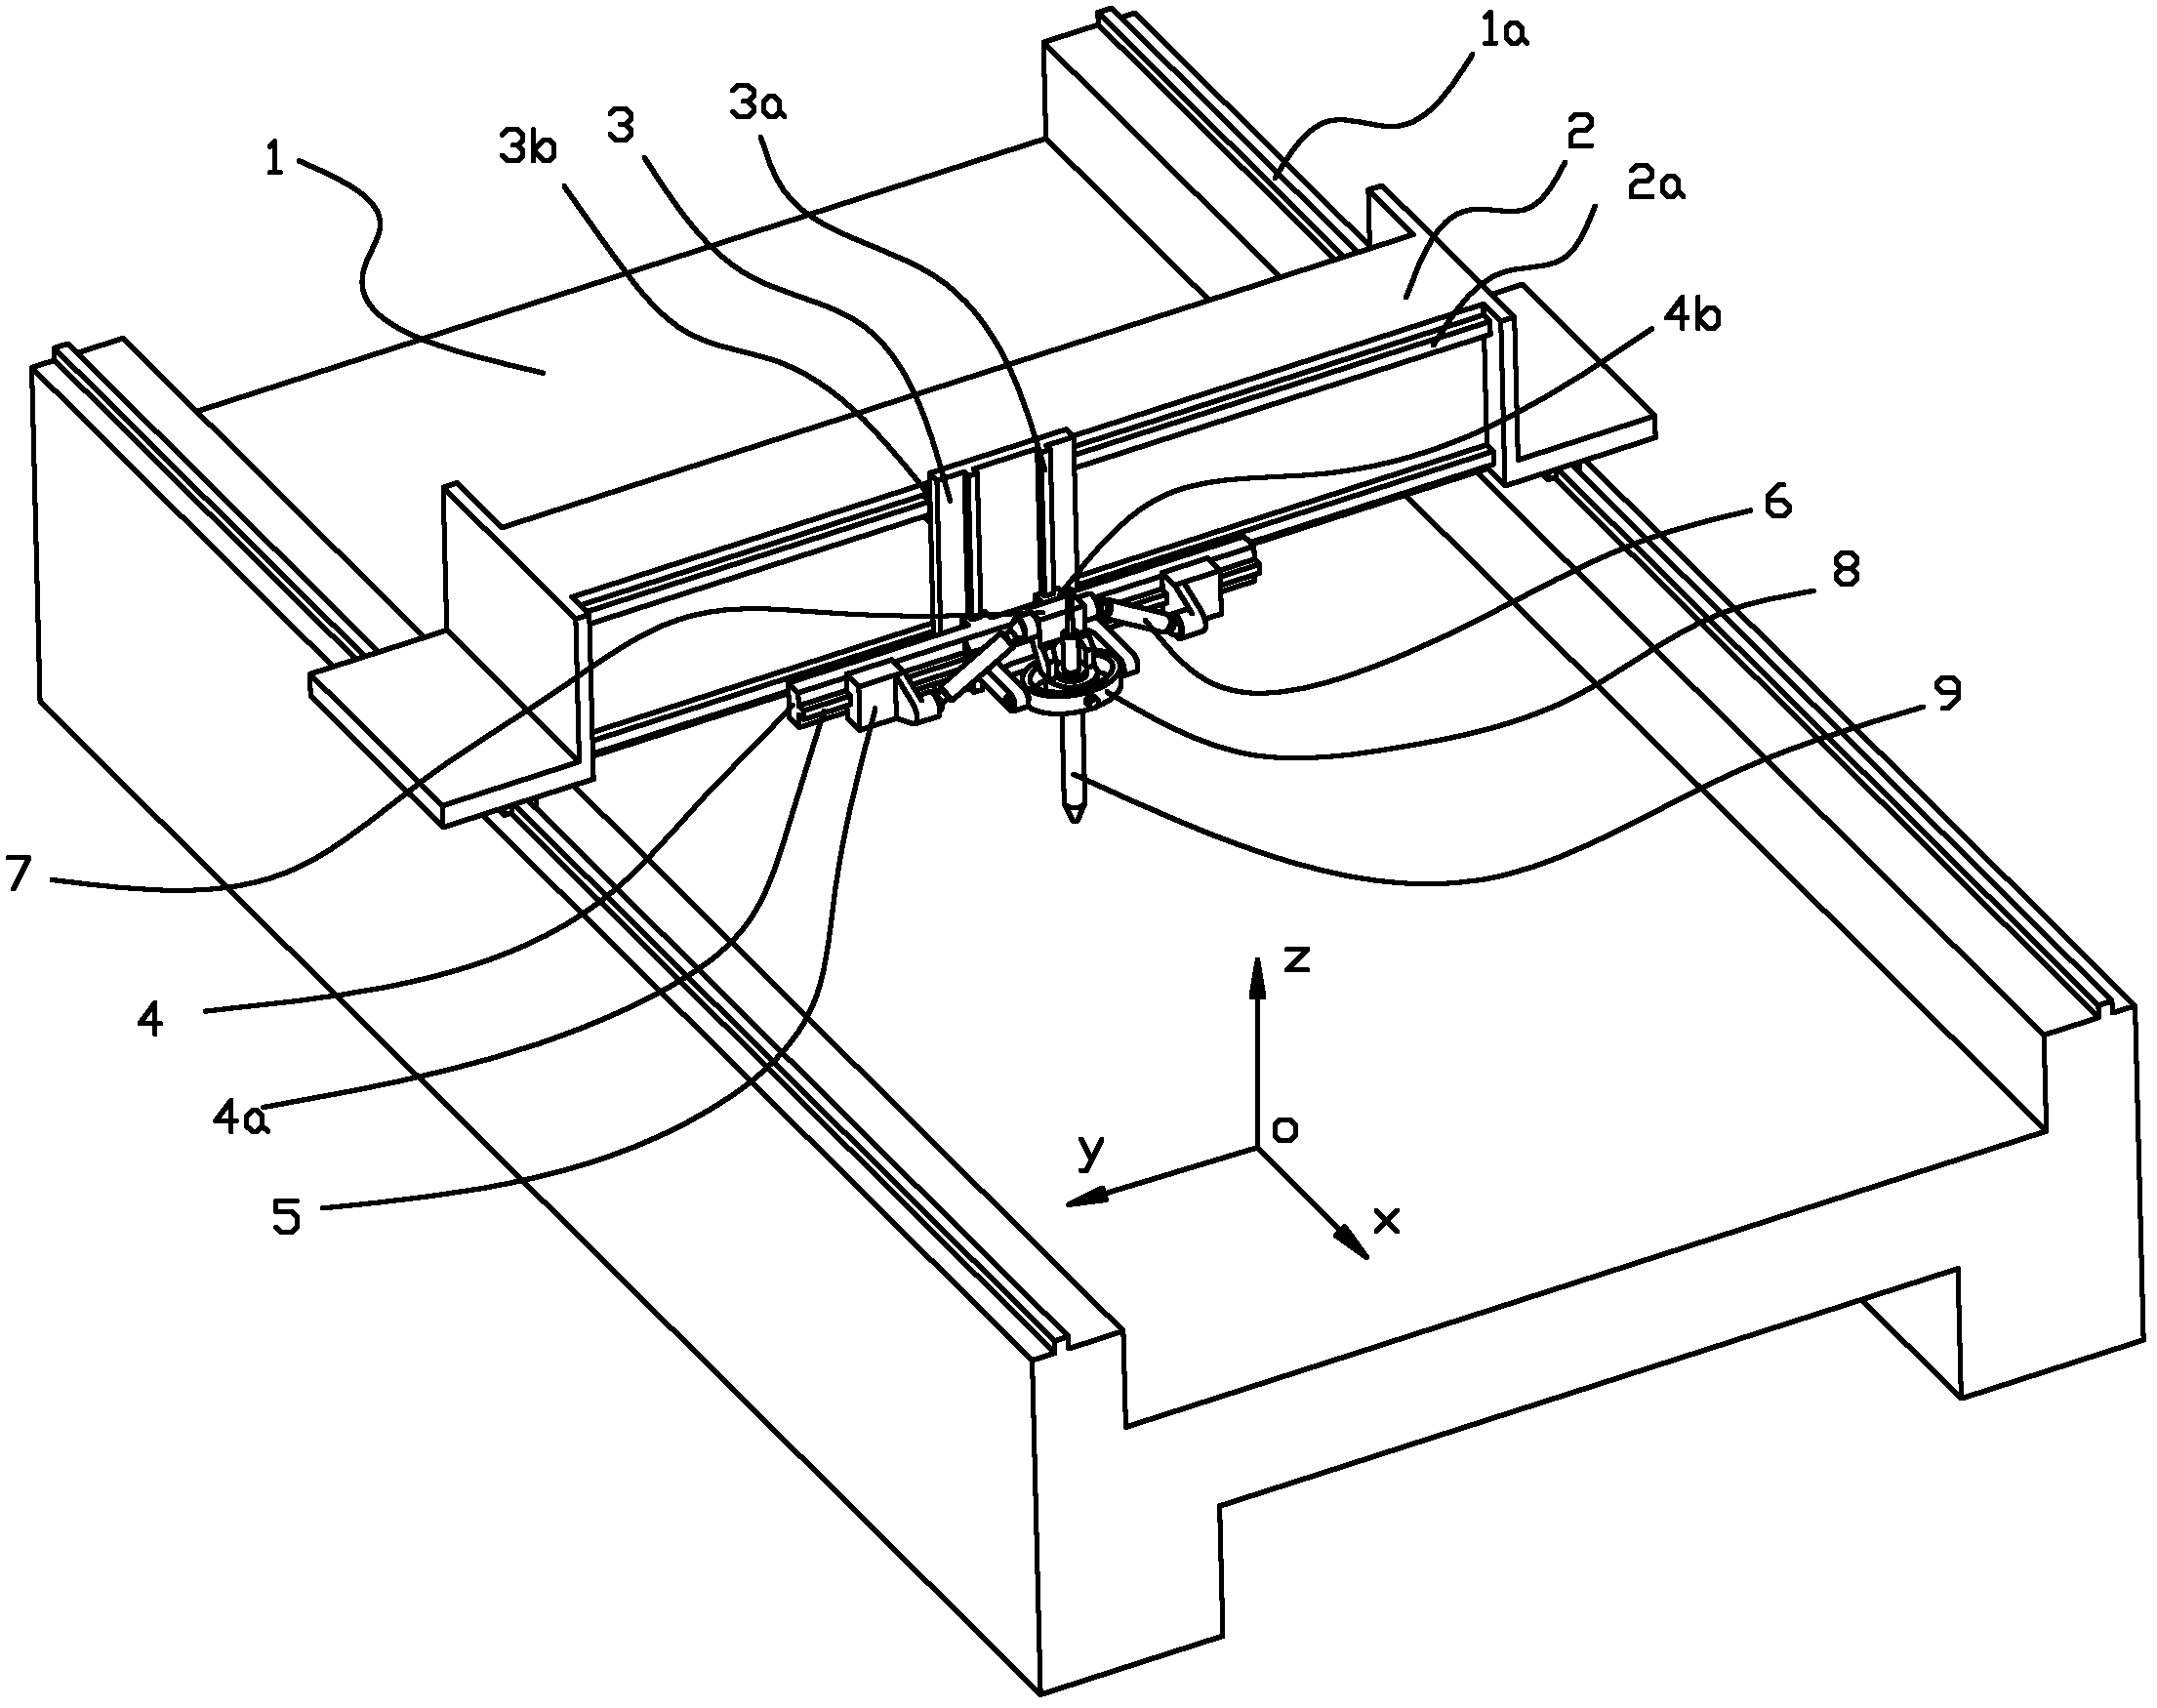 A hybrid five-axis laser cutting machine